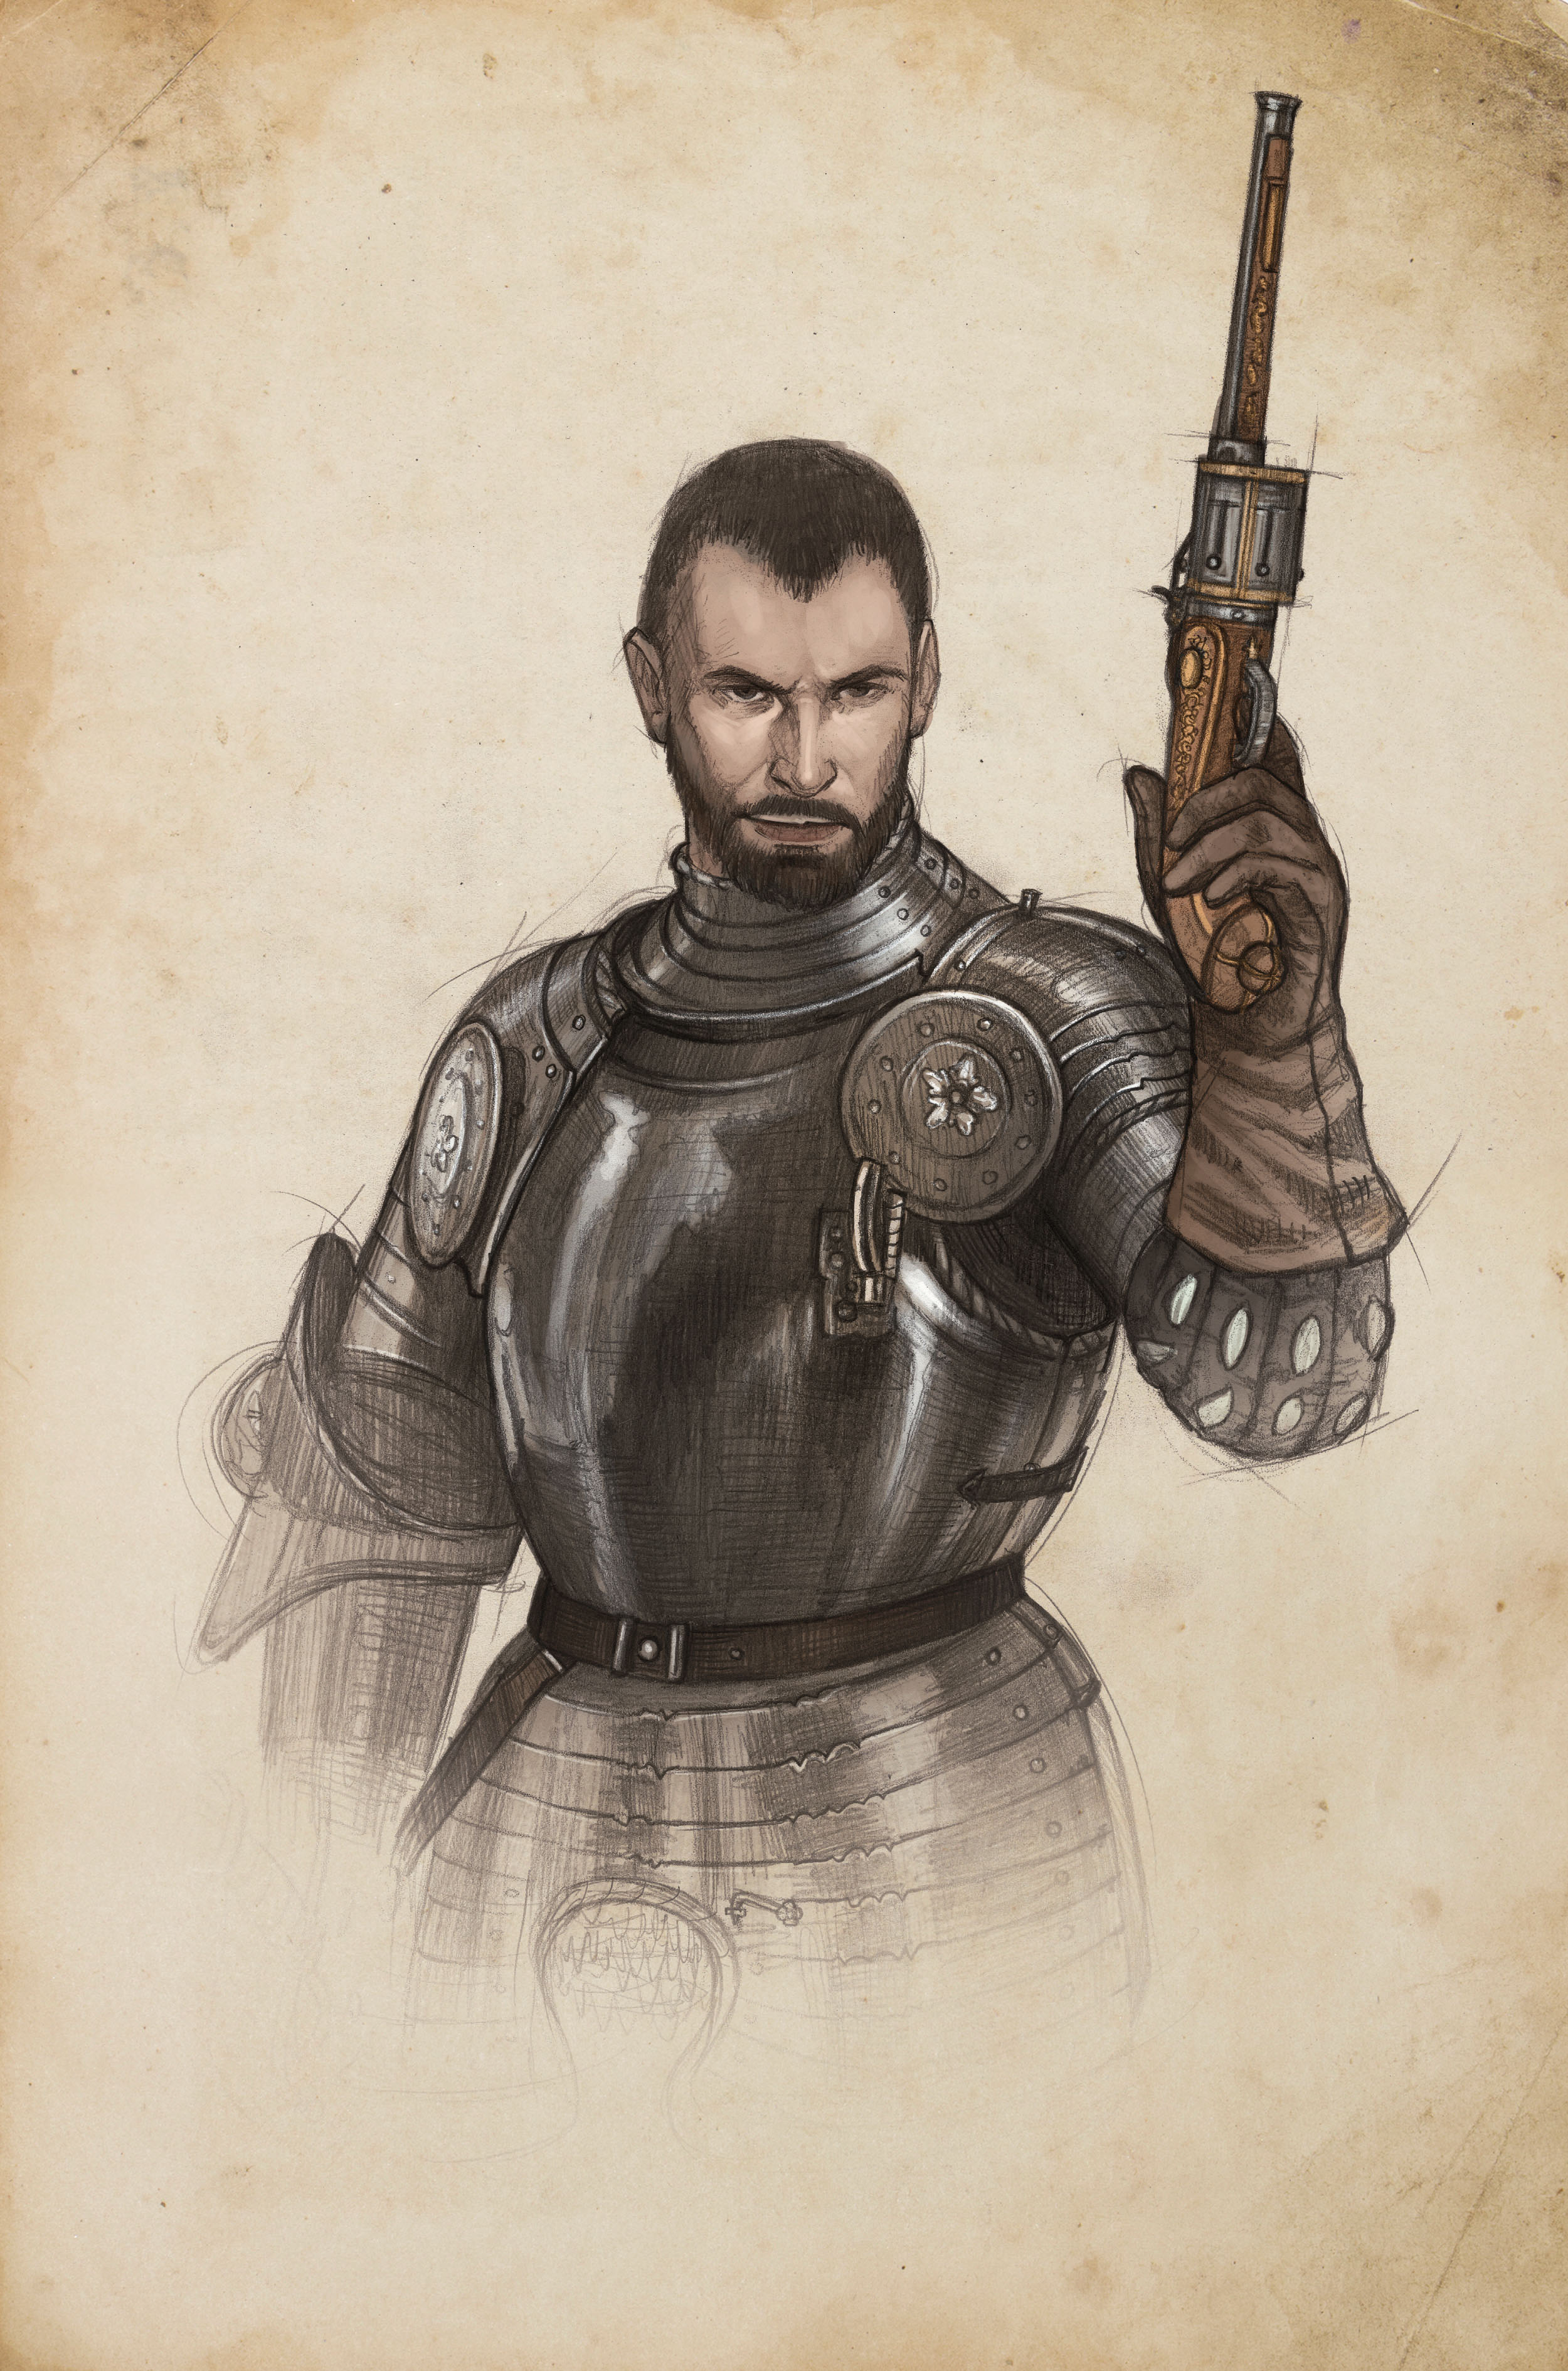 An illustration of an armoured man holding a flintlock pistol